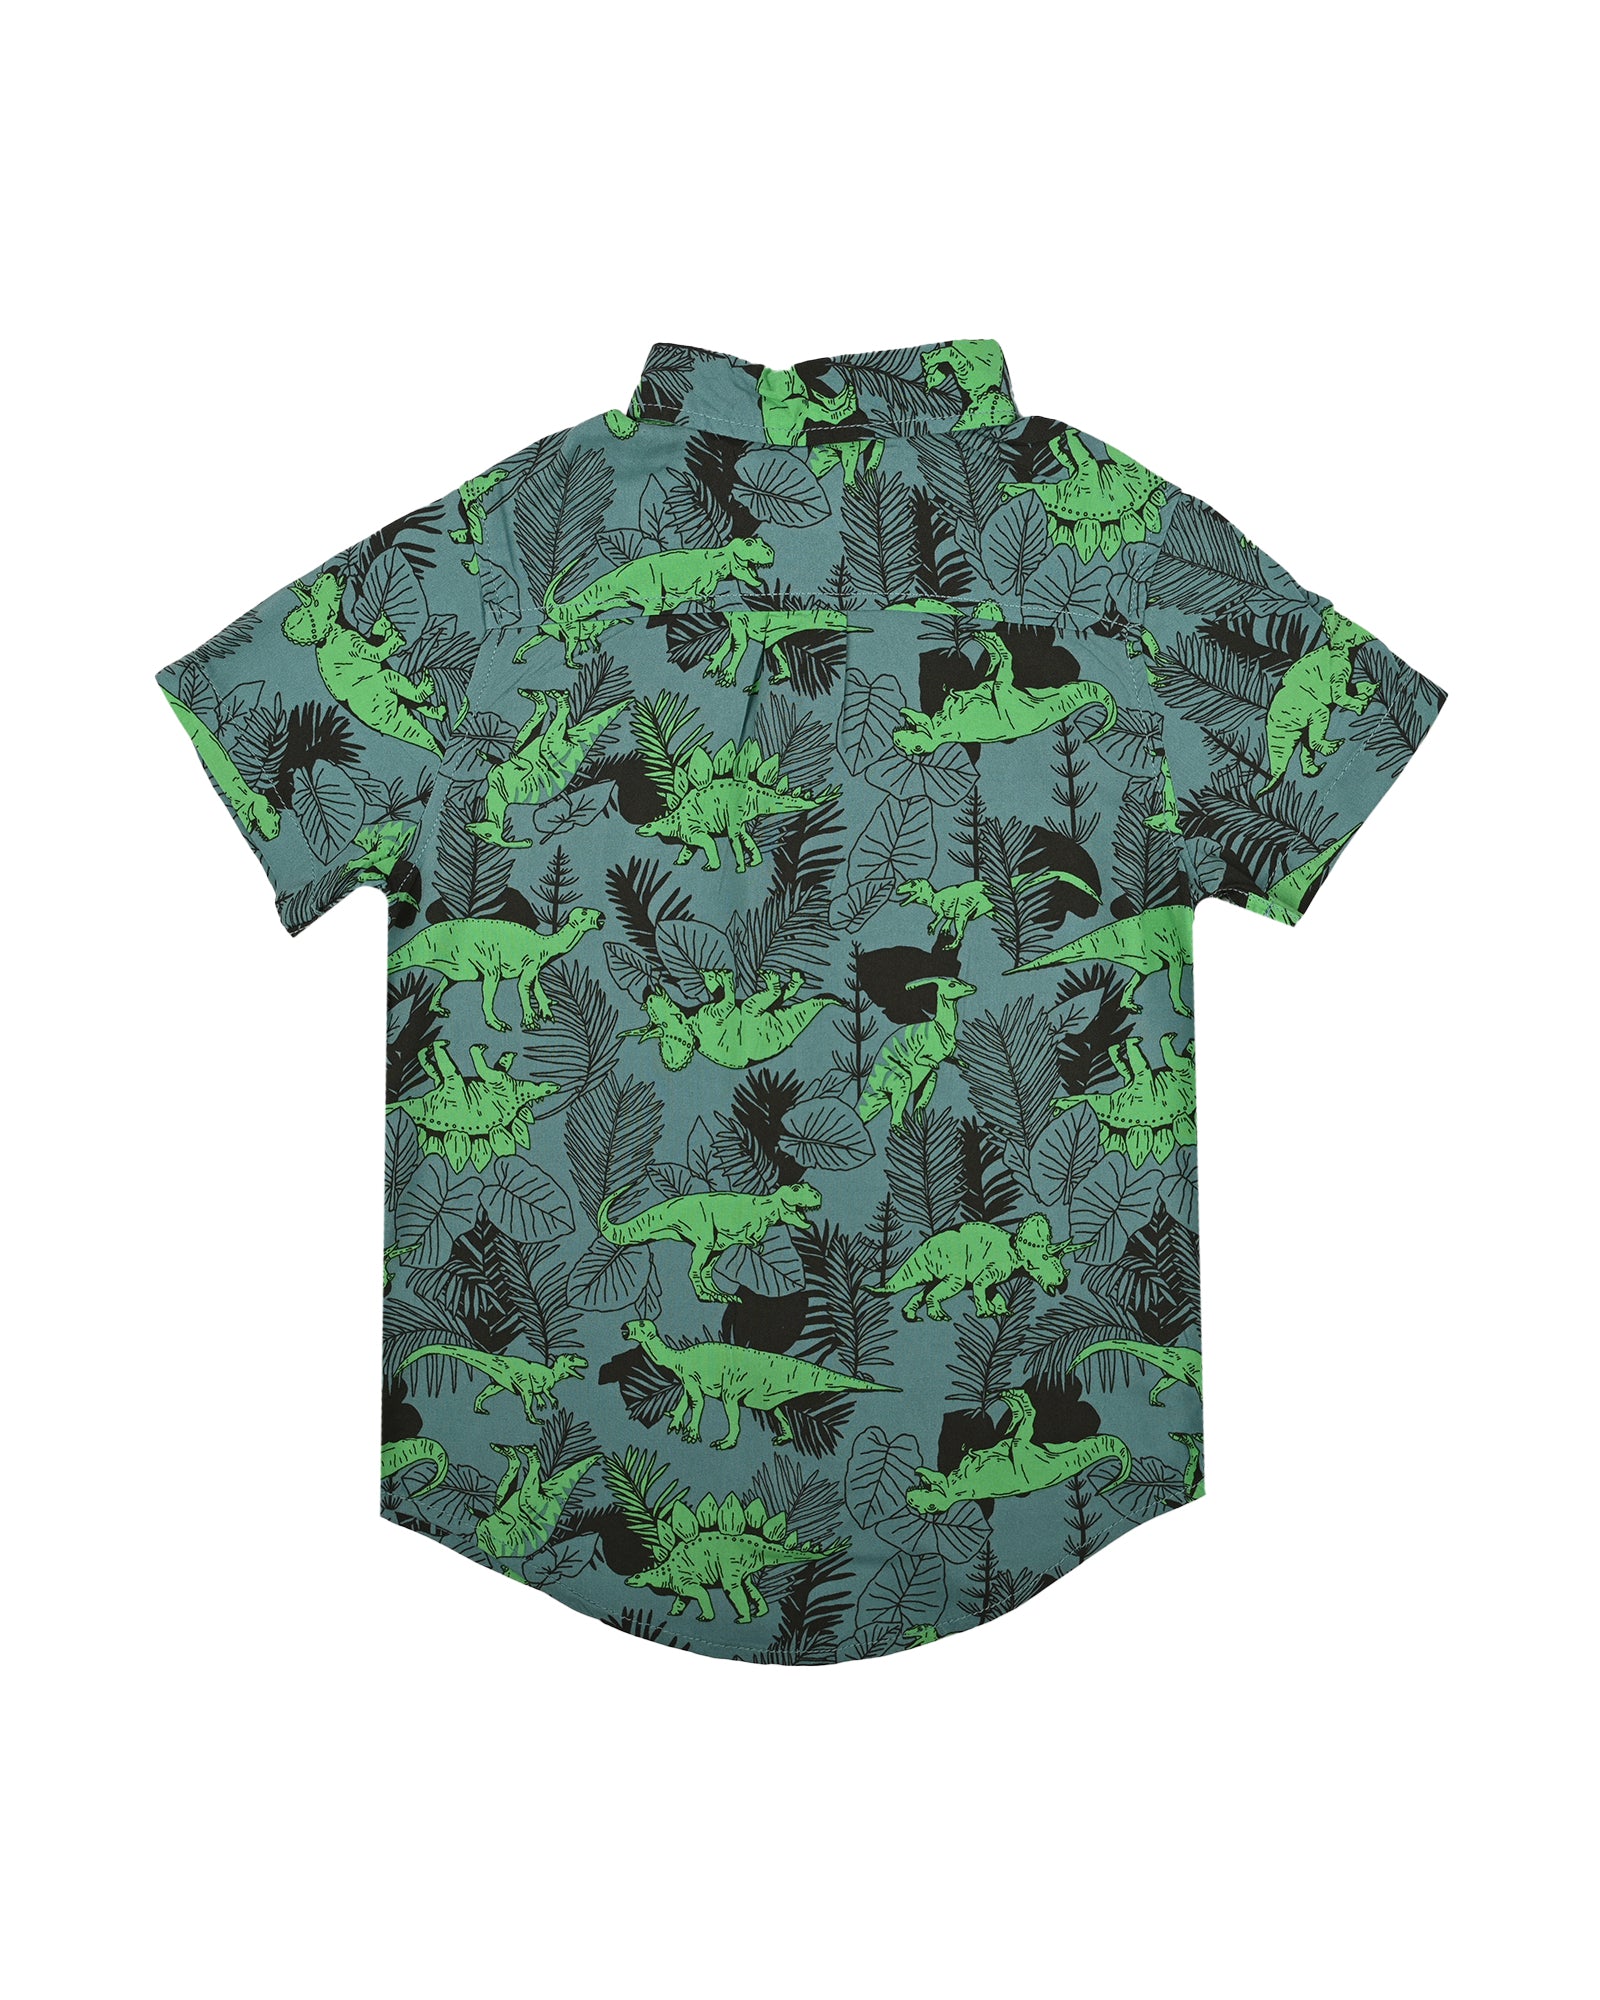 Boys Dinosaur Printed Shirt: Roaring Style for Little Adventurers